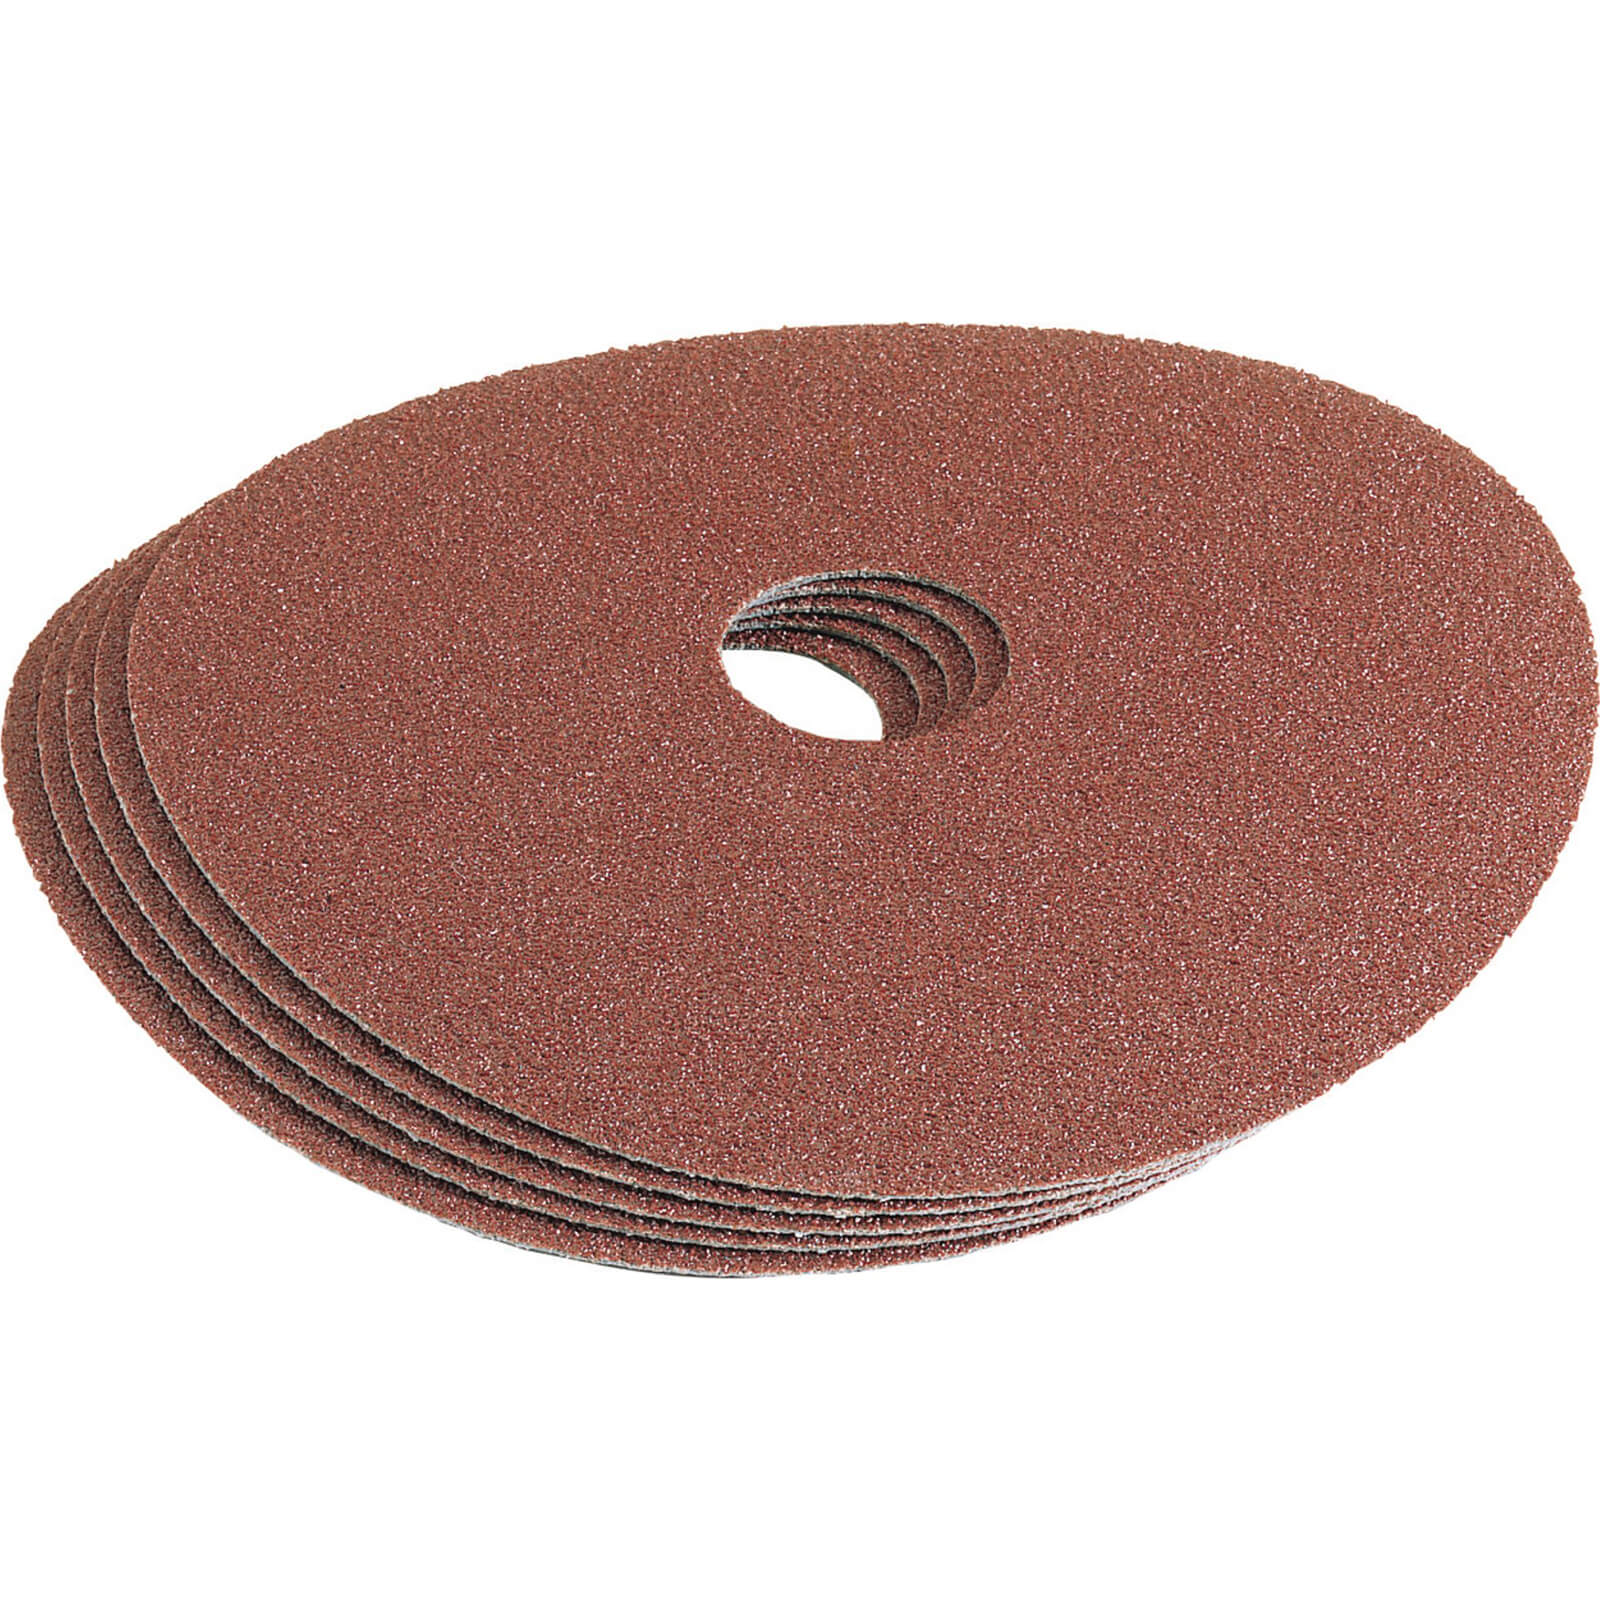 Image of Draper 115mm Aluminium Oxide Sanding Discs 115mm 36g Pack of 5